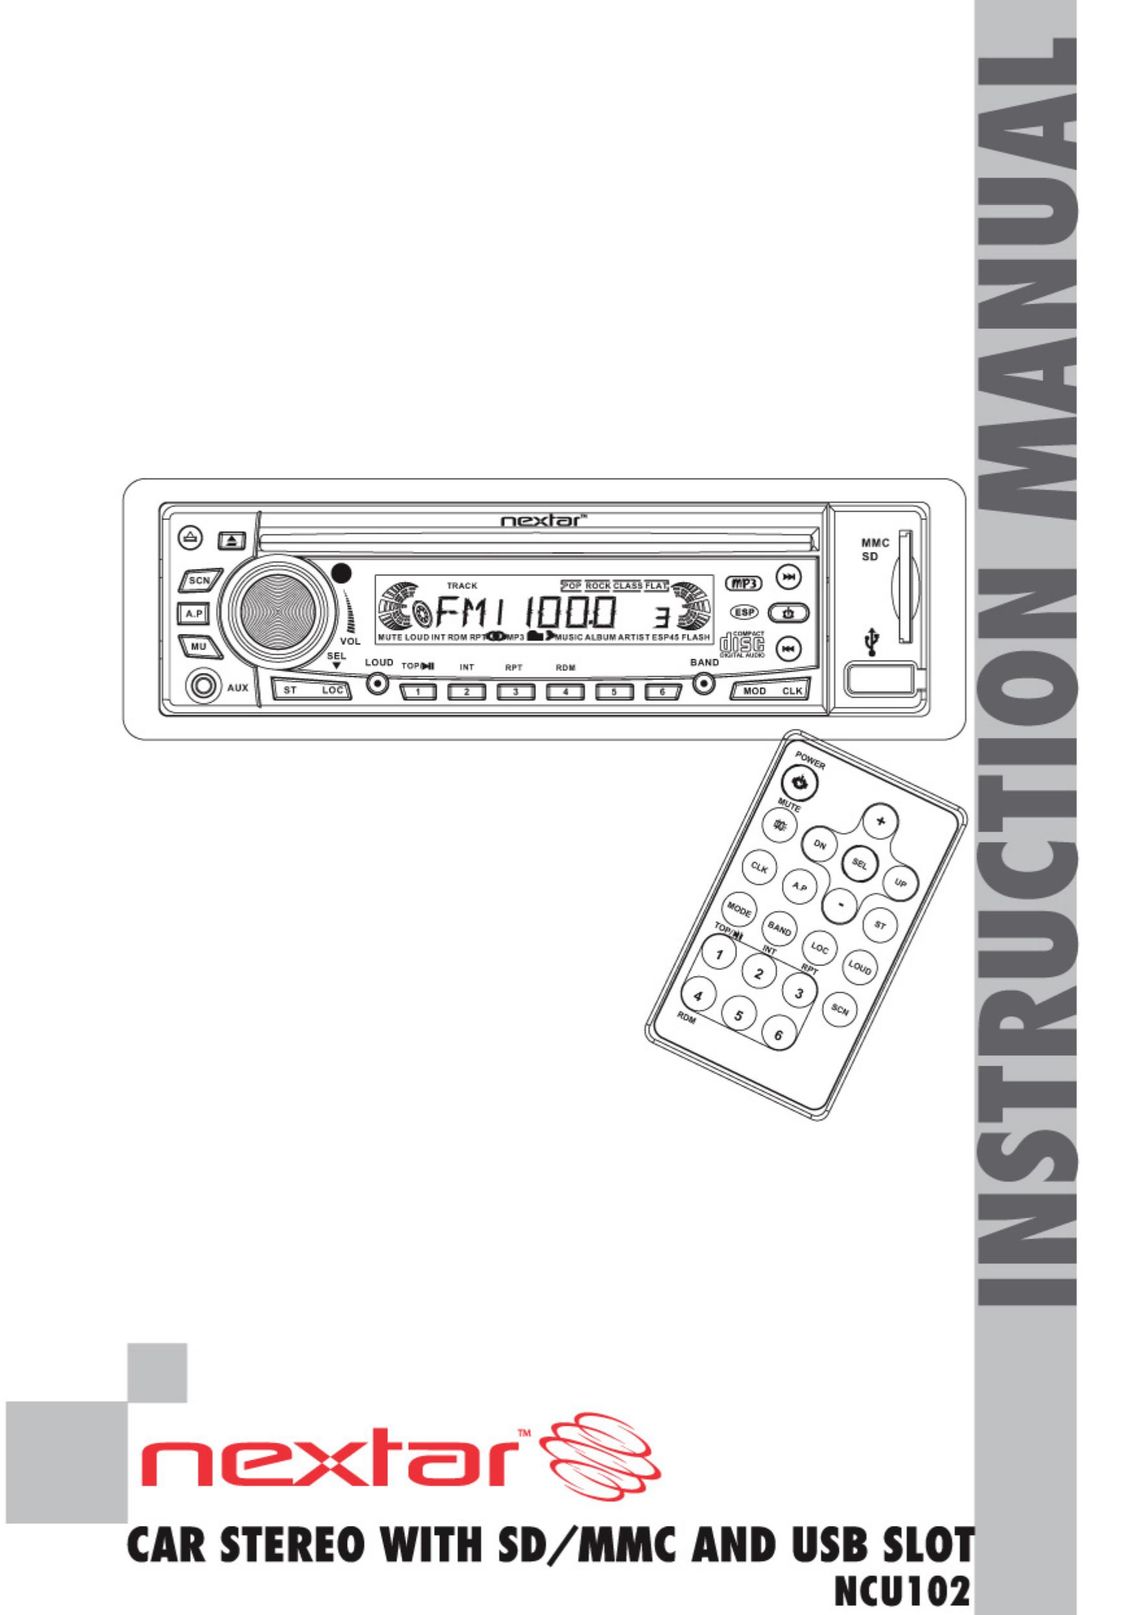 Nextar NCU102 Car Stereo System User Manual